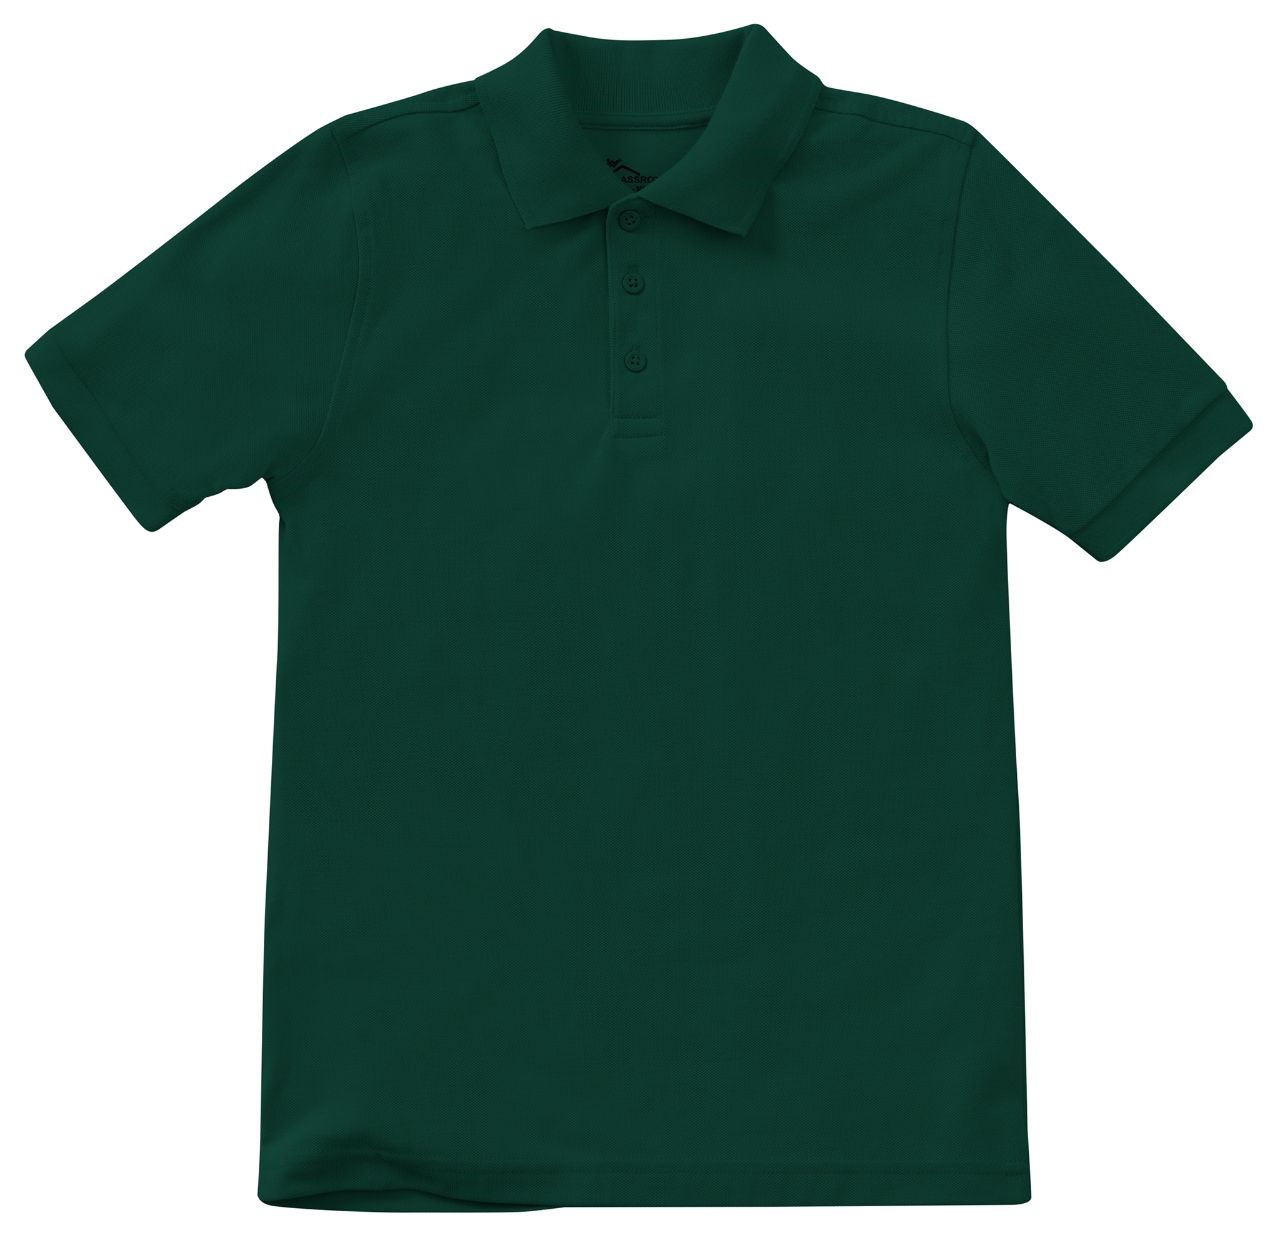 AR-Youth short sleeve pique Polo shirt with Logo